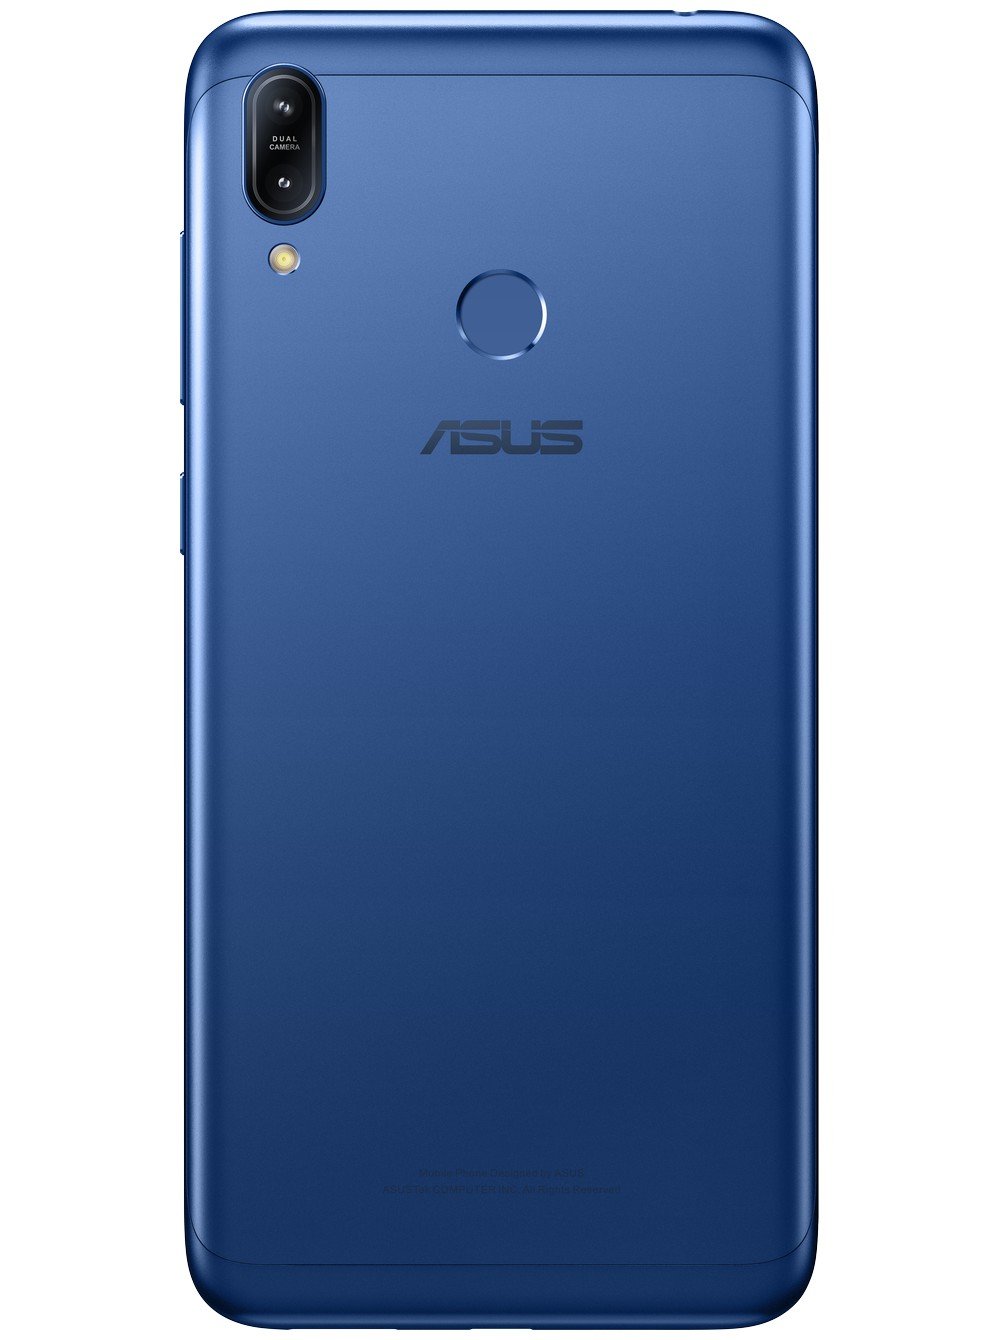 Asus Zenfone Max (M2) ZB633KL specs, review, release date - PhonesData